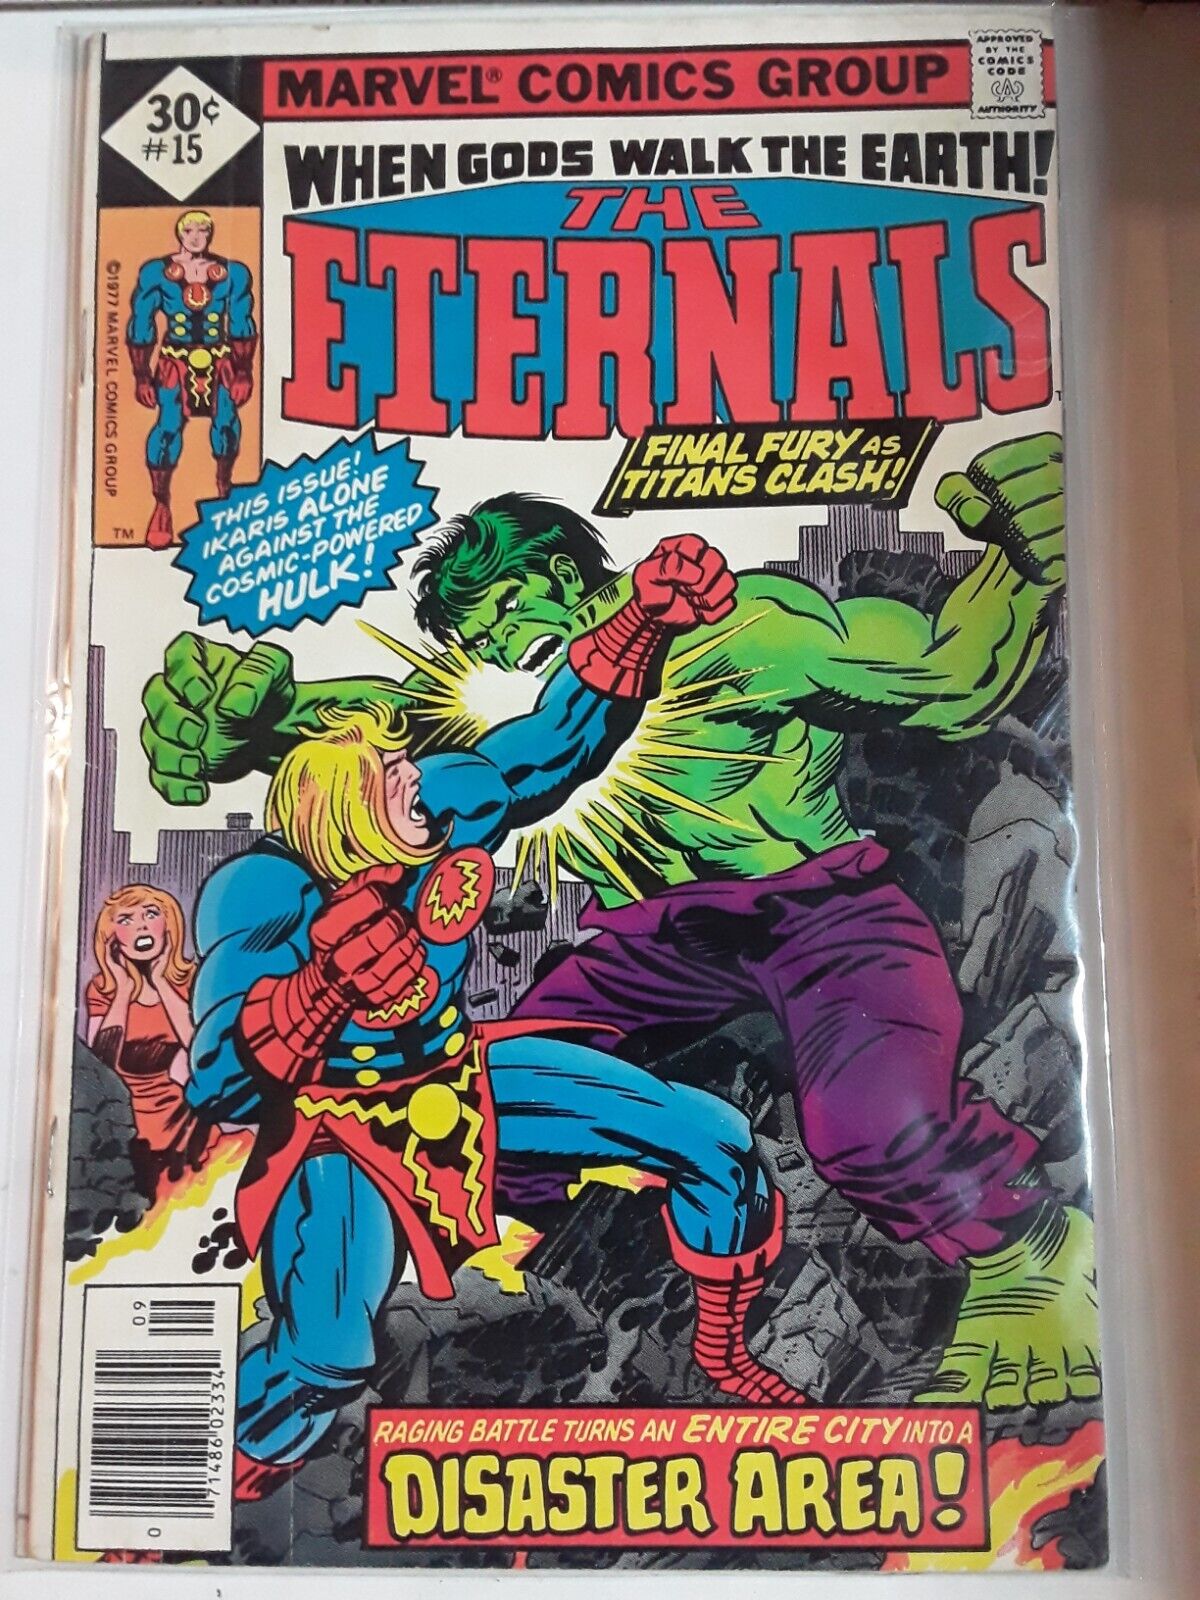 Eternals #15 Marvel 1st Series (7.0 FN/VF) (1977)